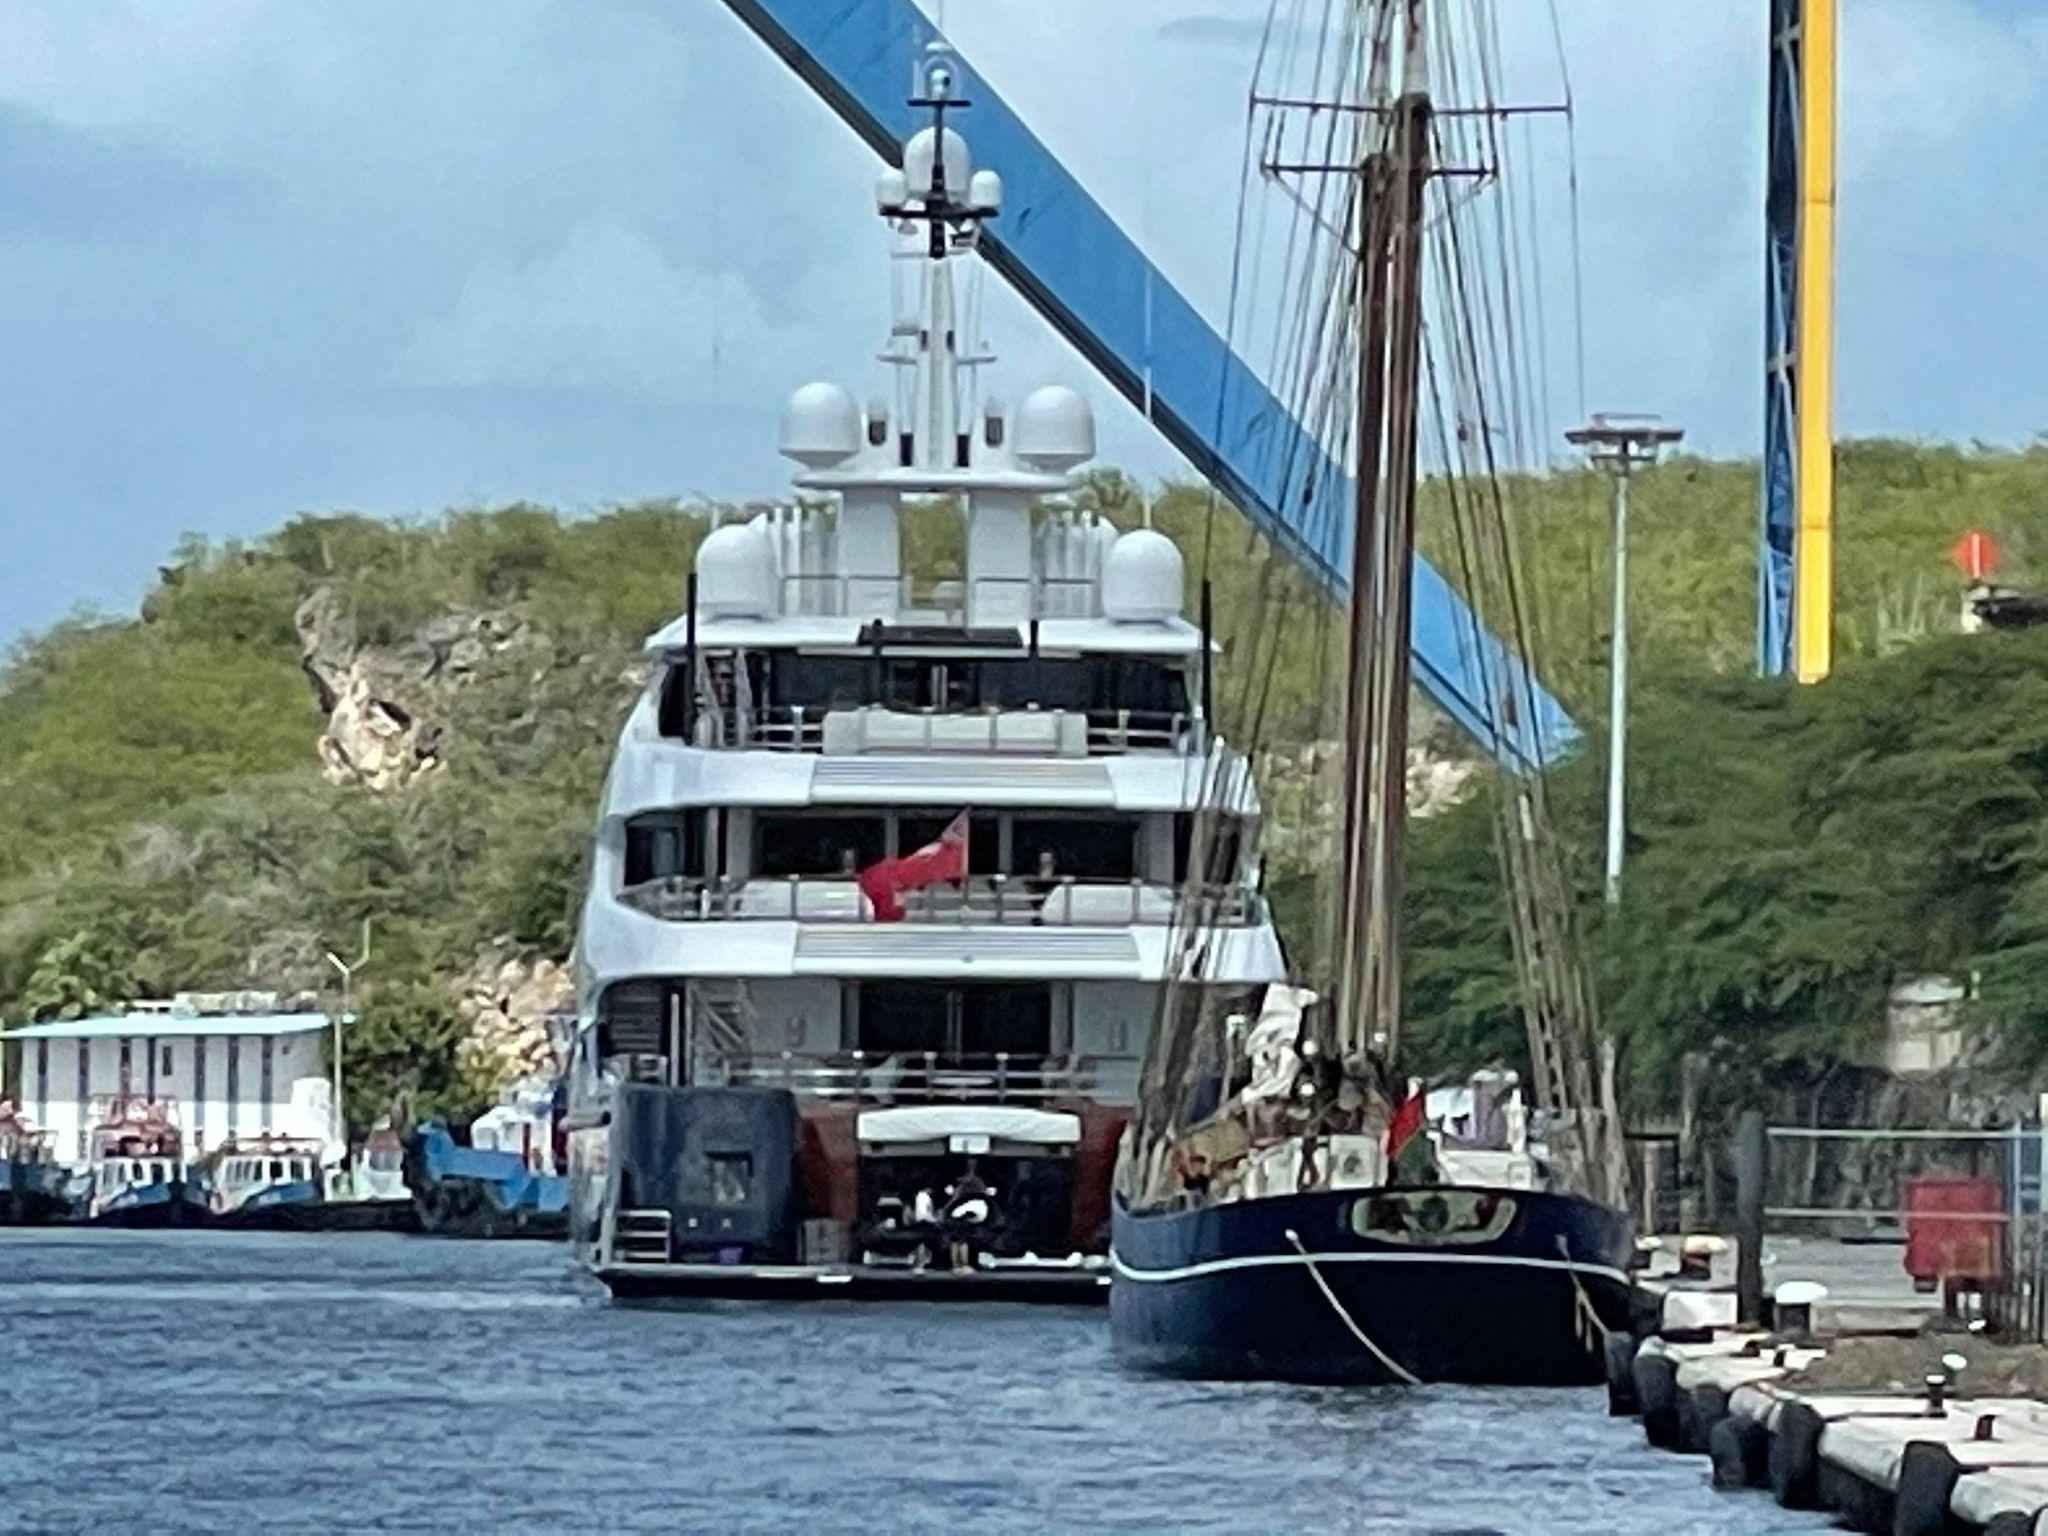 Die Oceanco-Yacht Barbara in Willemstad Curacao